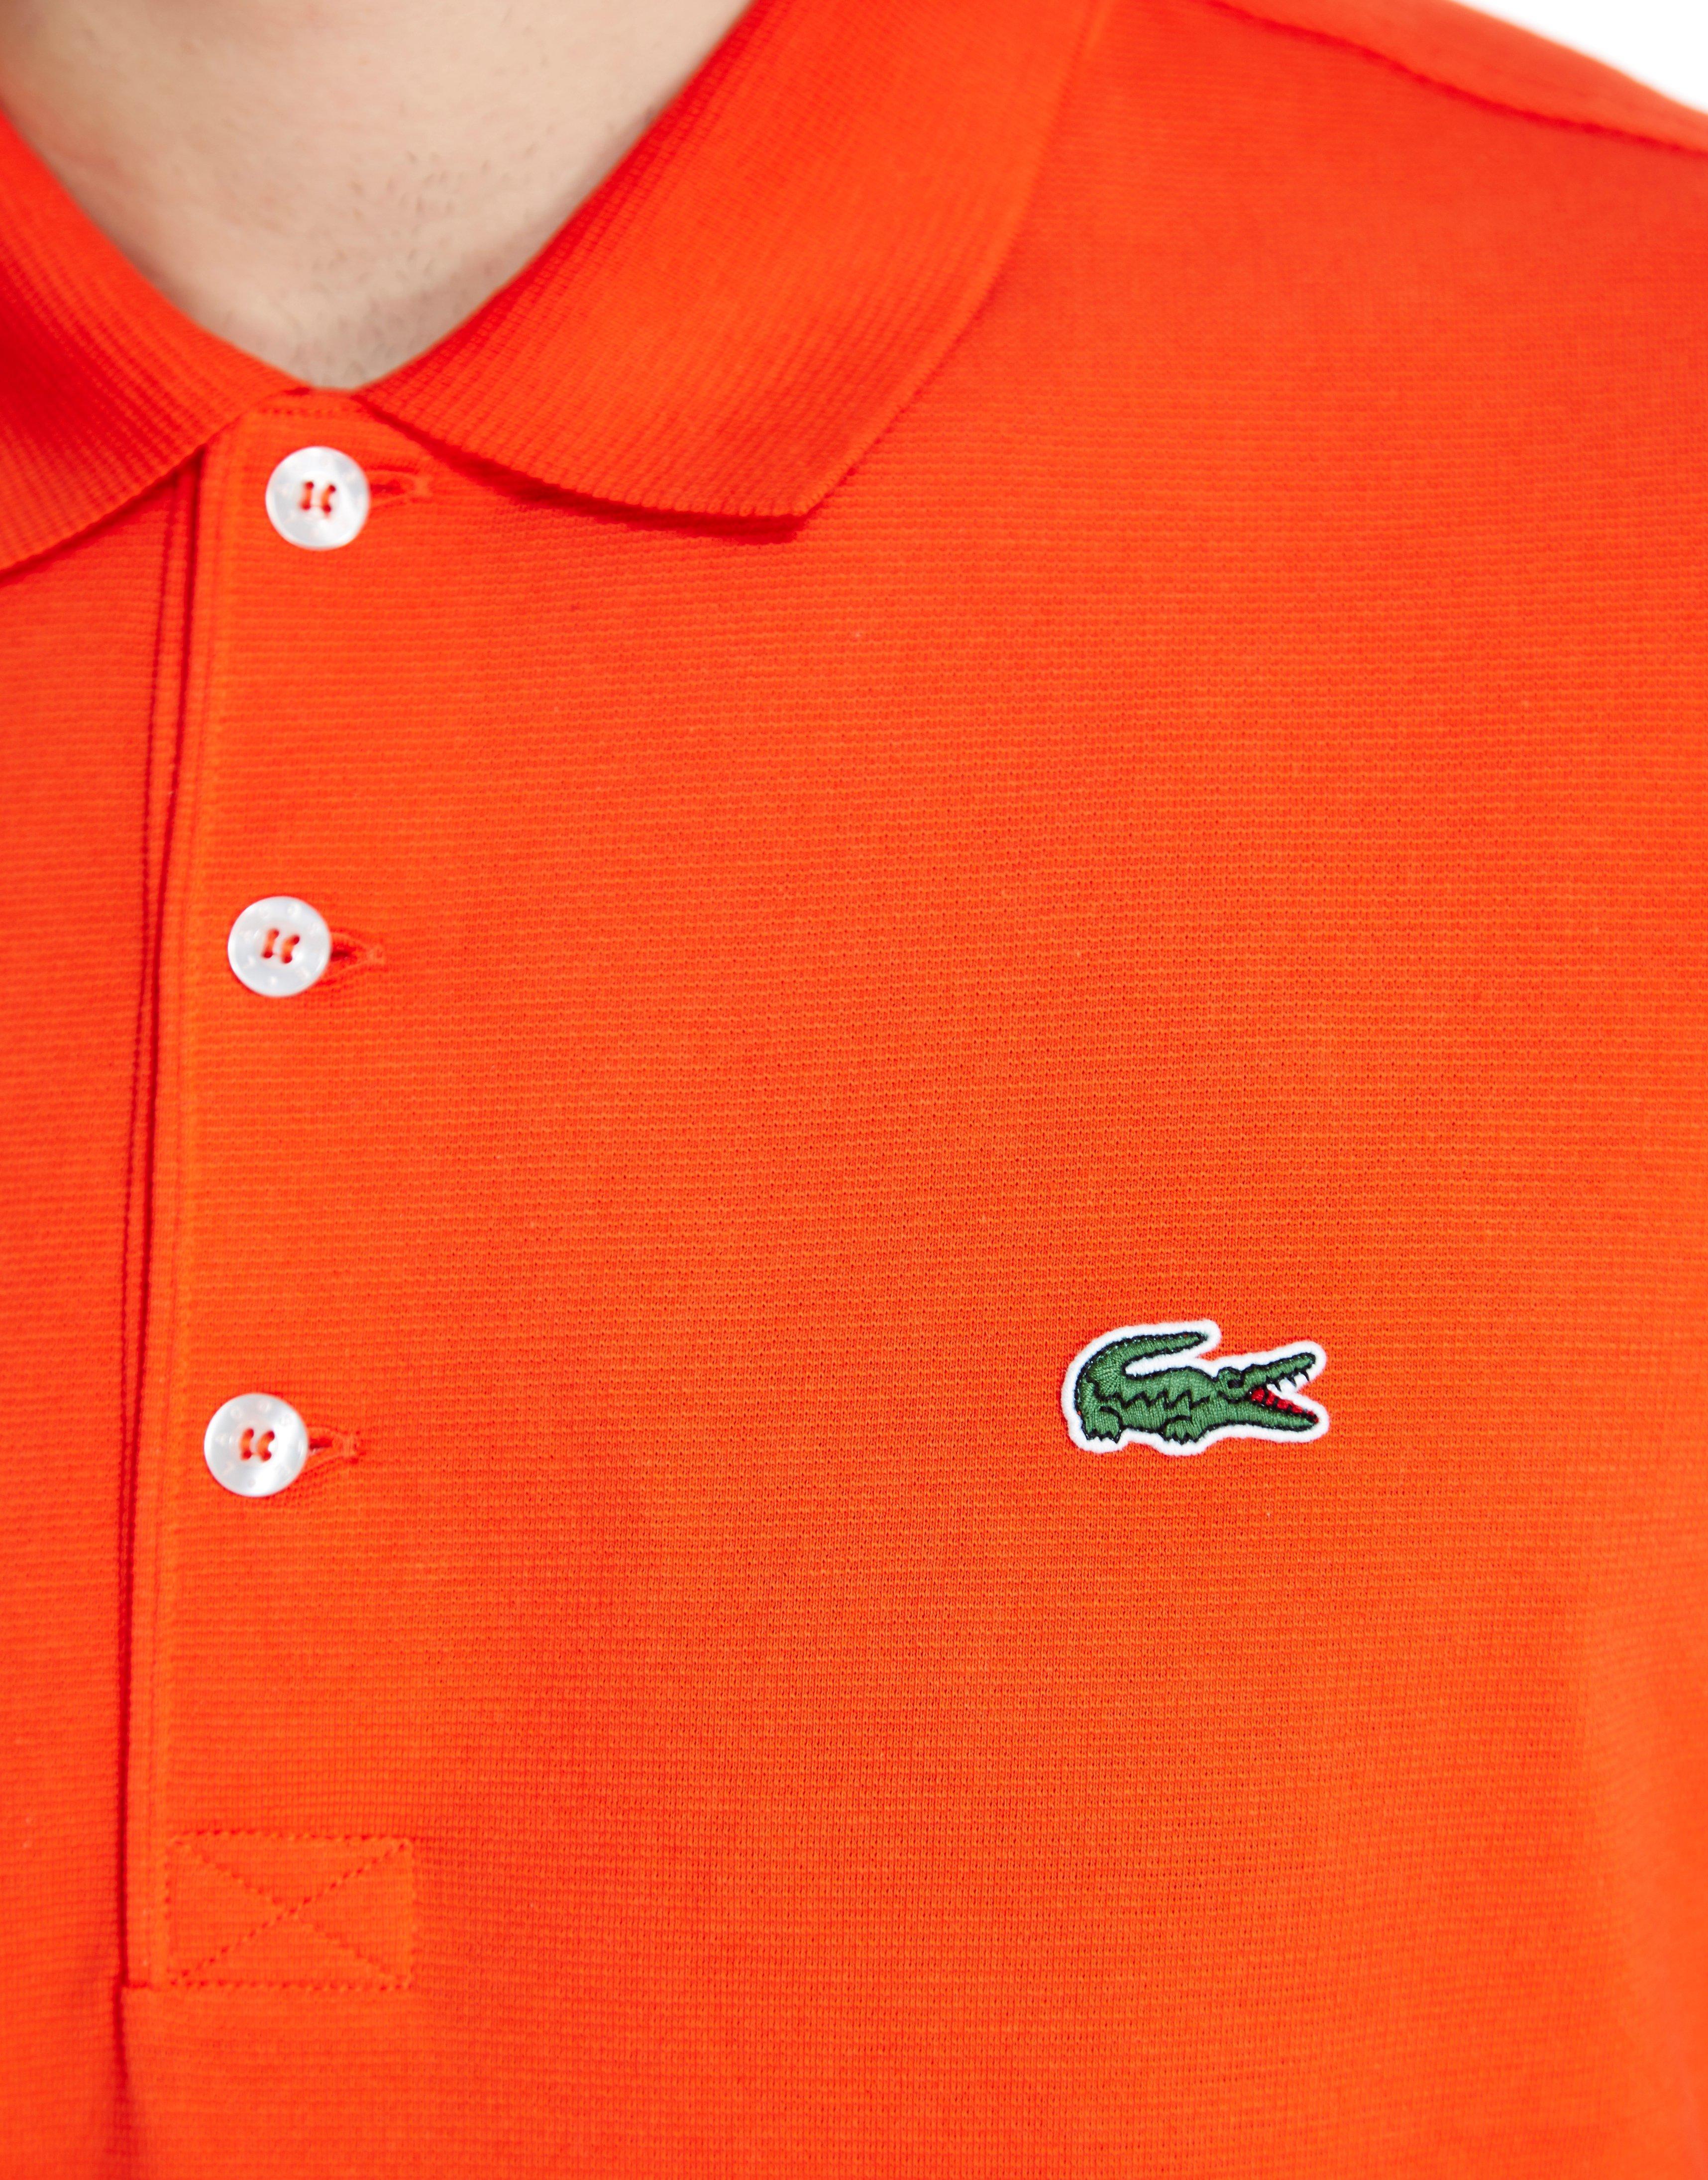 shirt with alligator symbol